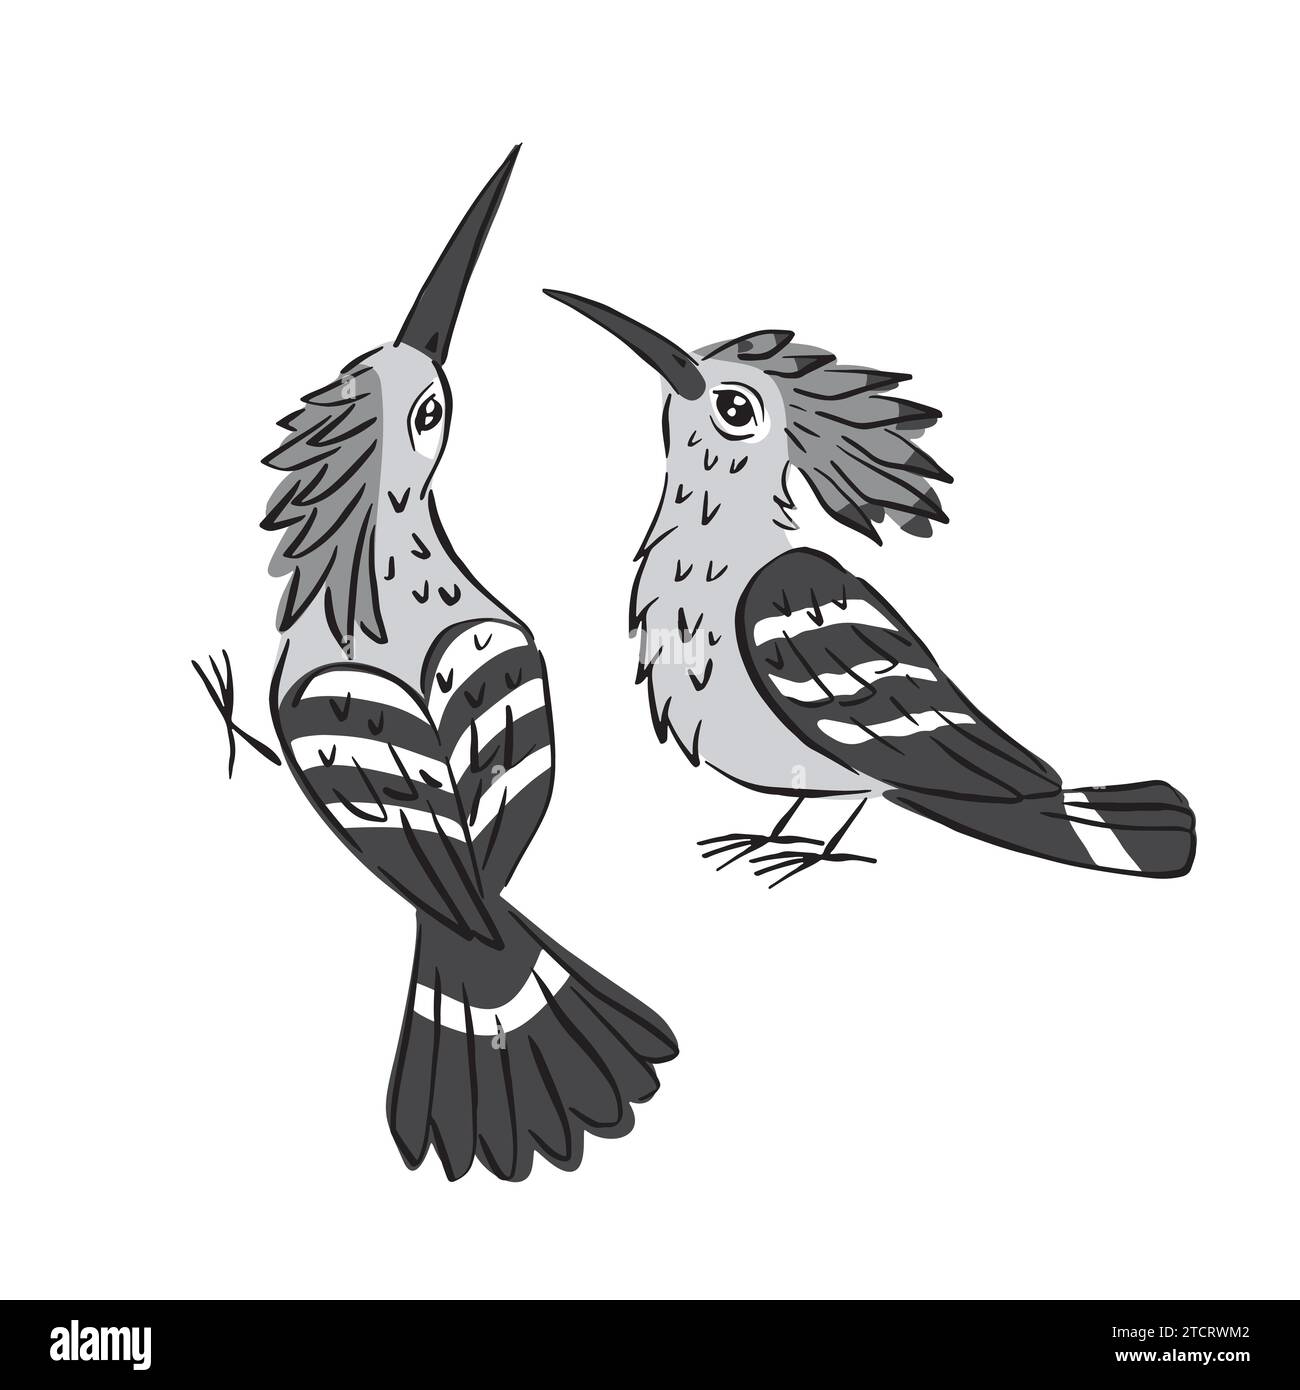 Line art colorful illustration of cute hoopoe birds Stock Vector